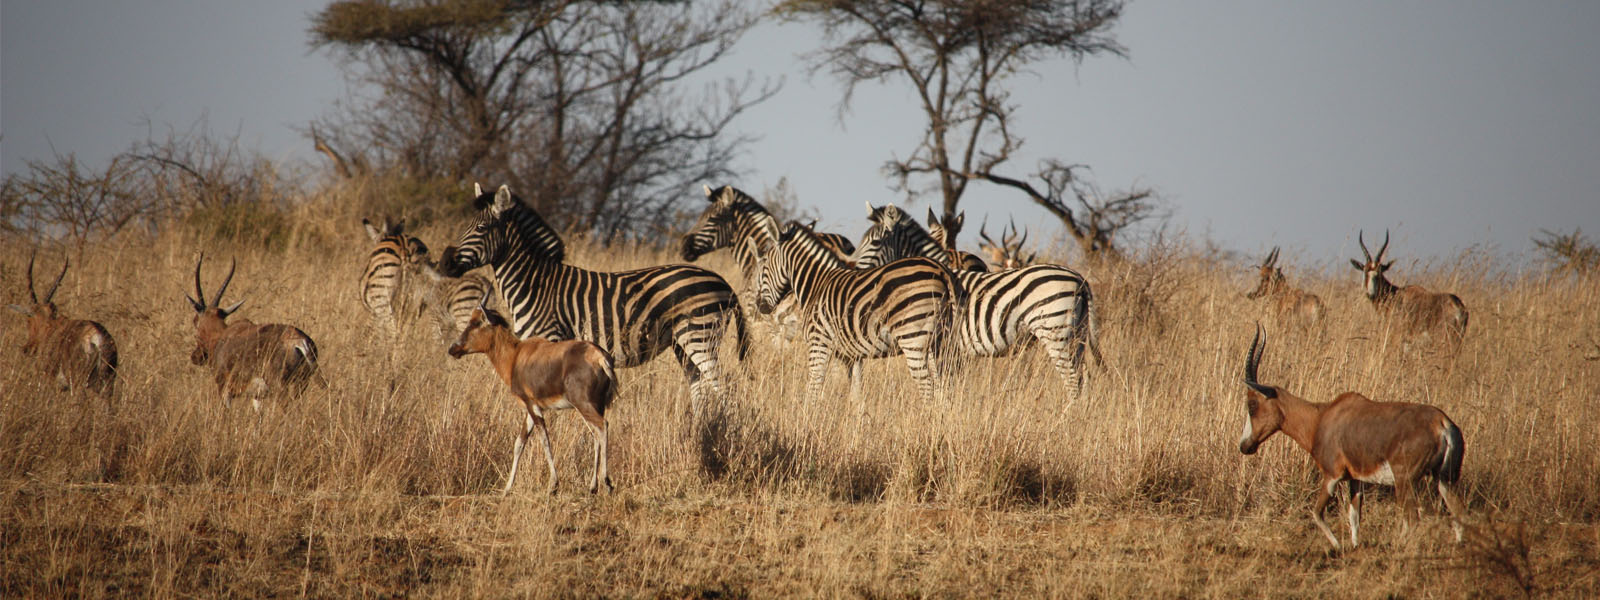 Zebra at Mankwe Wildlife Reserve, South Africa